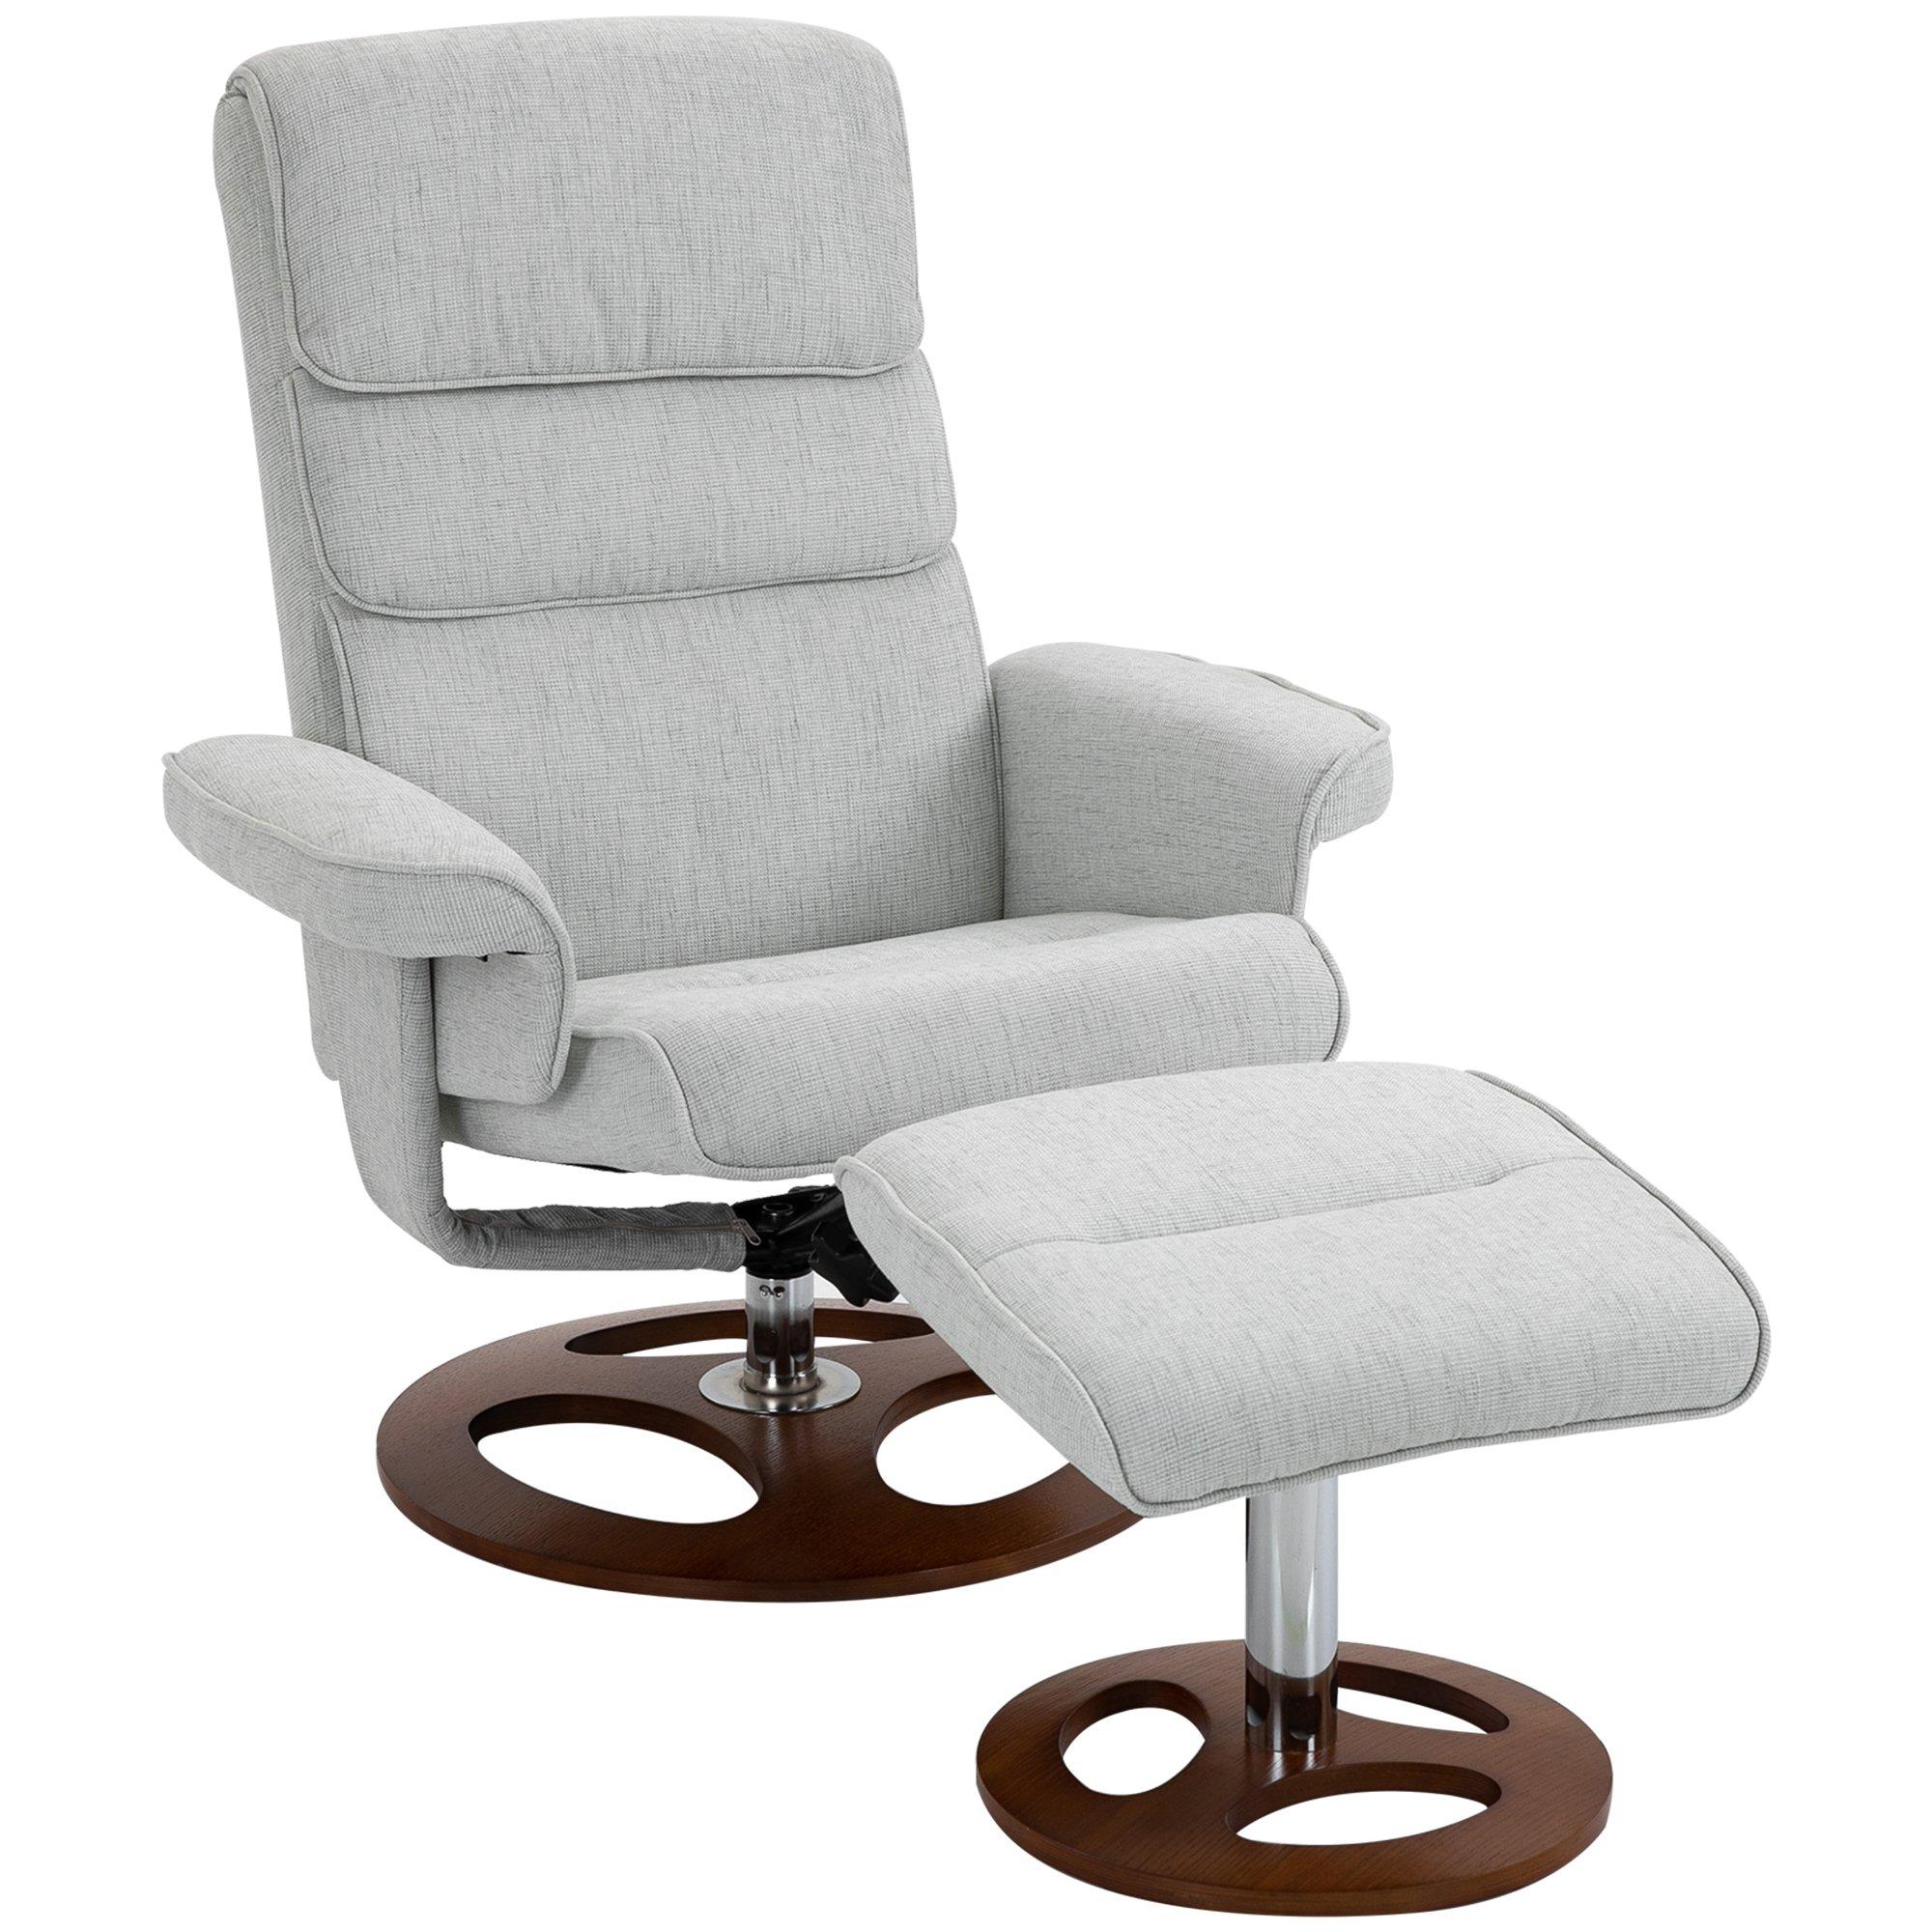 Recliner Chair Ottoman Set 360 degree Swivel Sofa Thick Padding